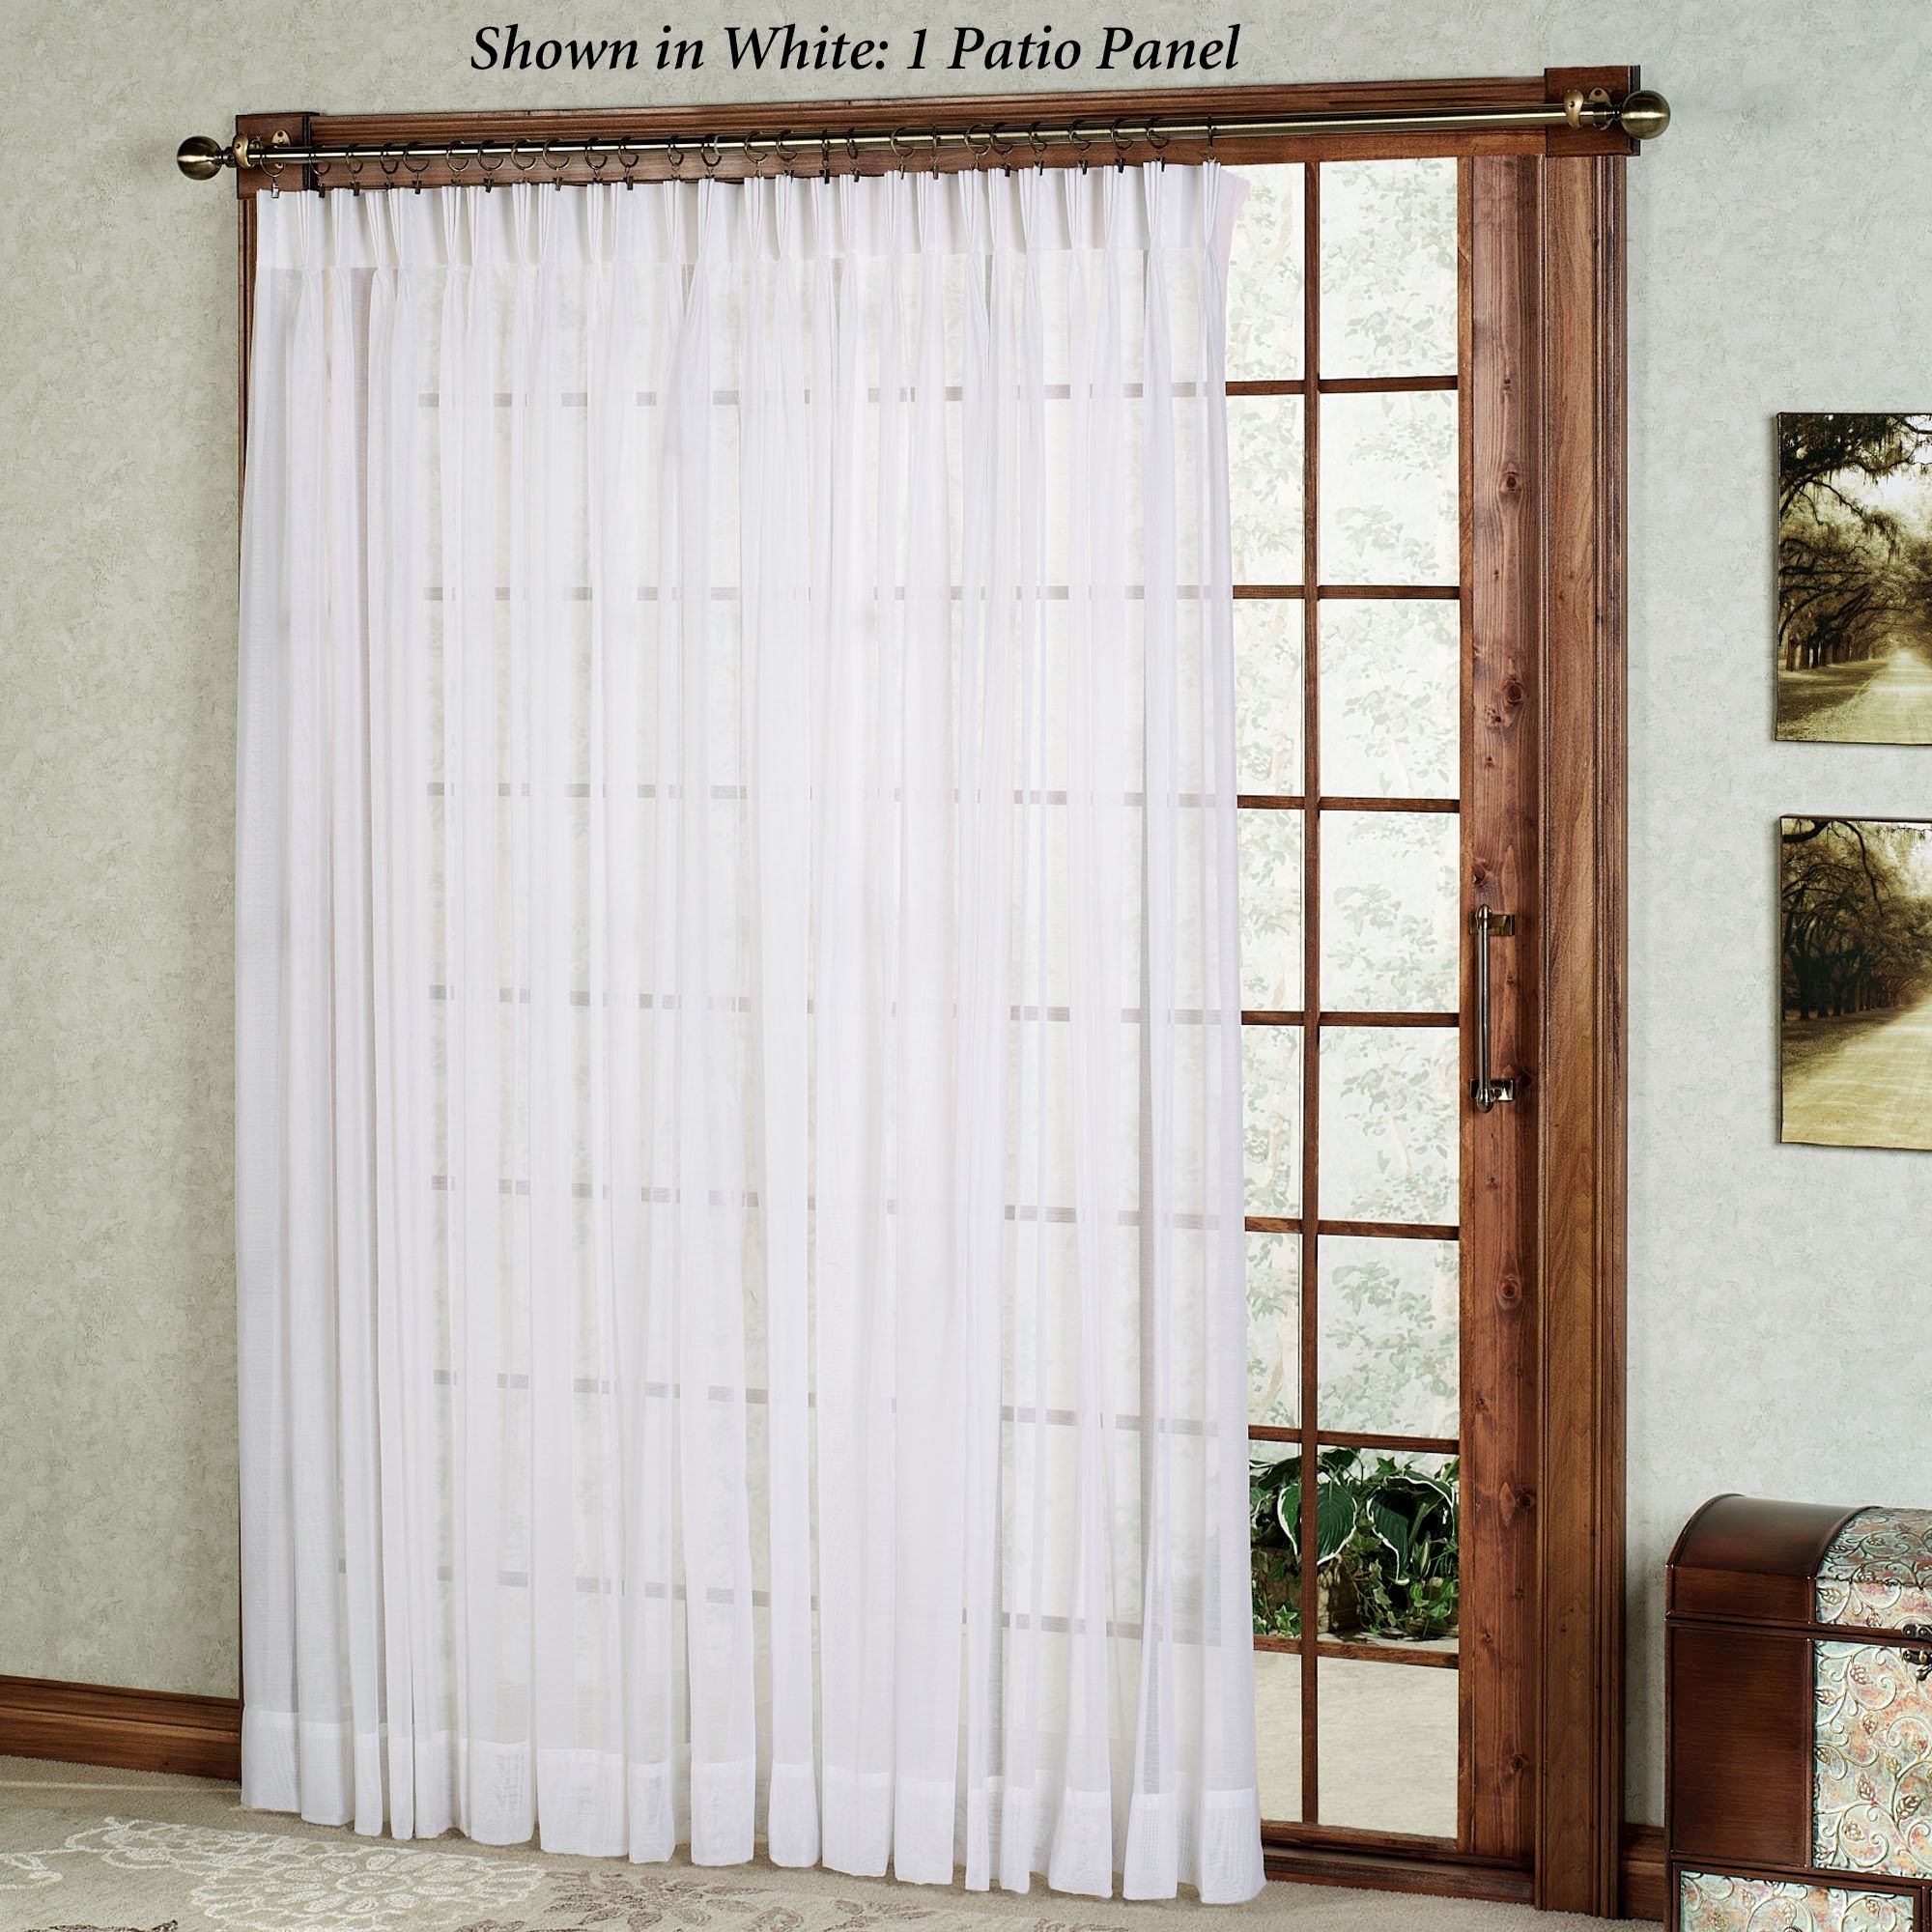 Curtains For Patio Doors Visualhunt, 3 Panel Sliding Patio Door Curtains